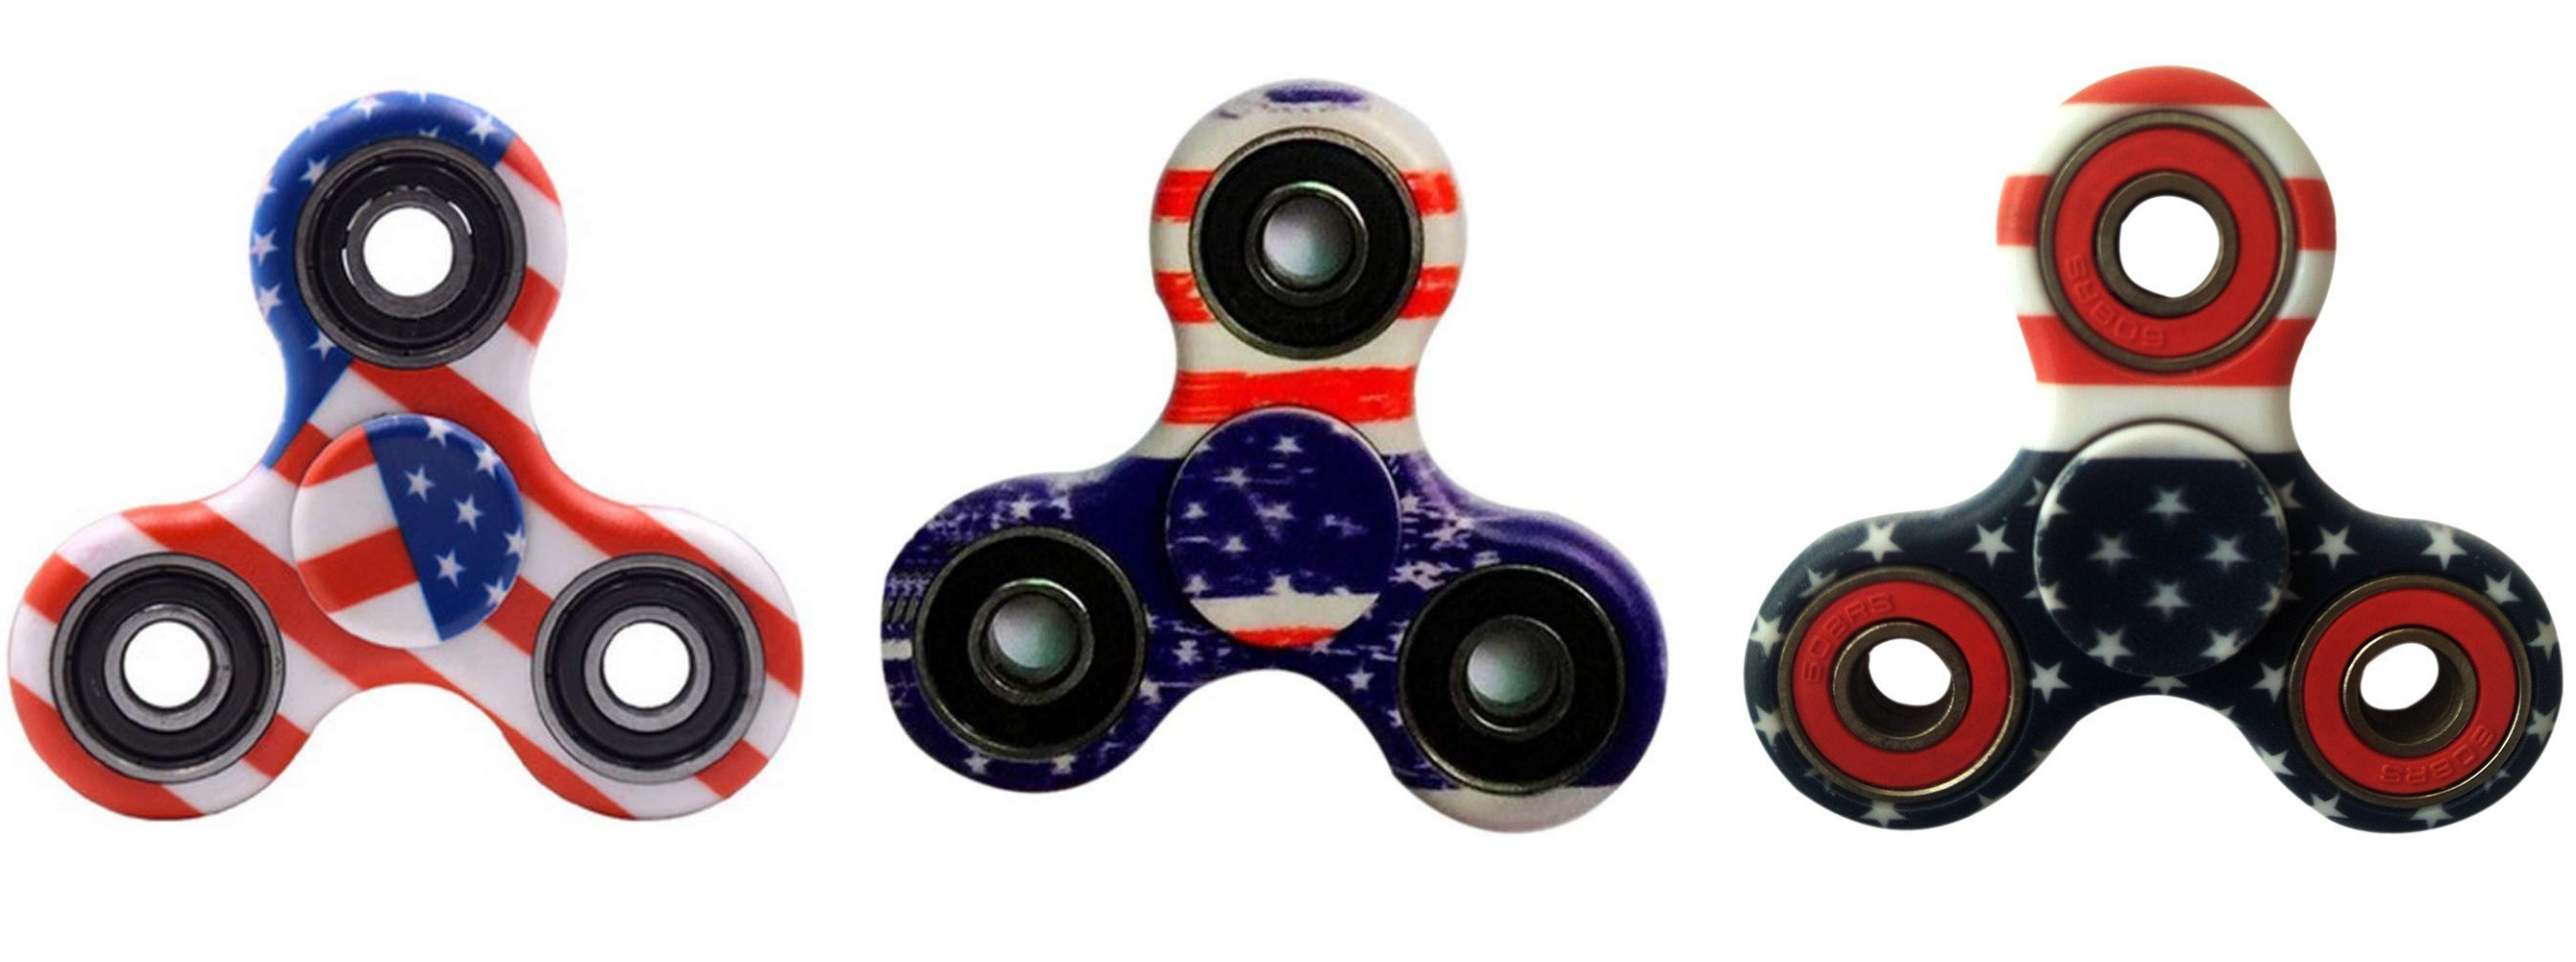 American flag fidget spinners